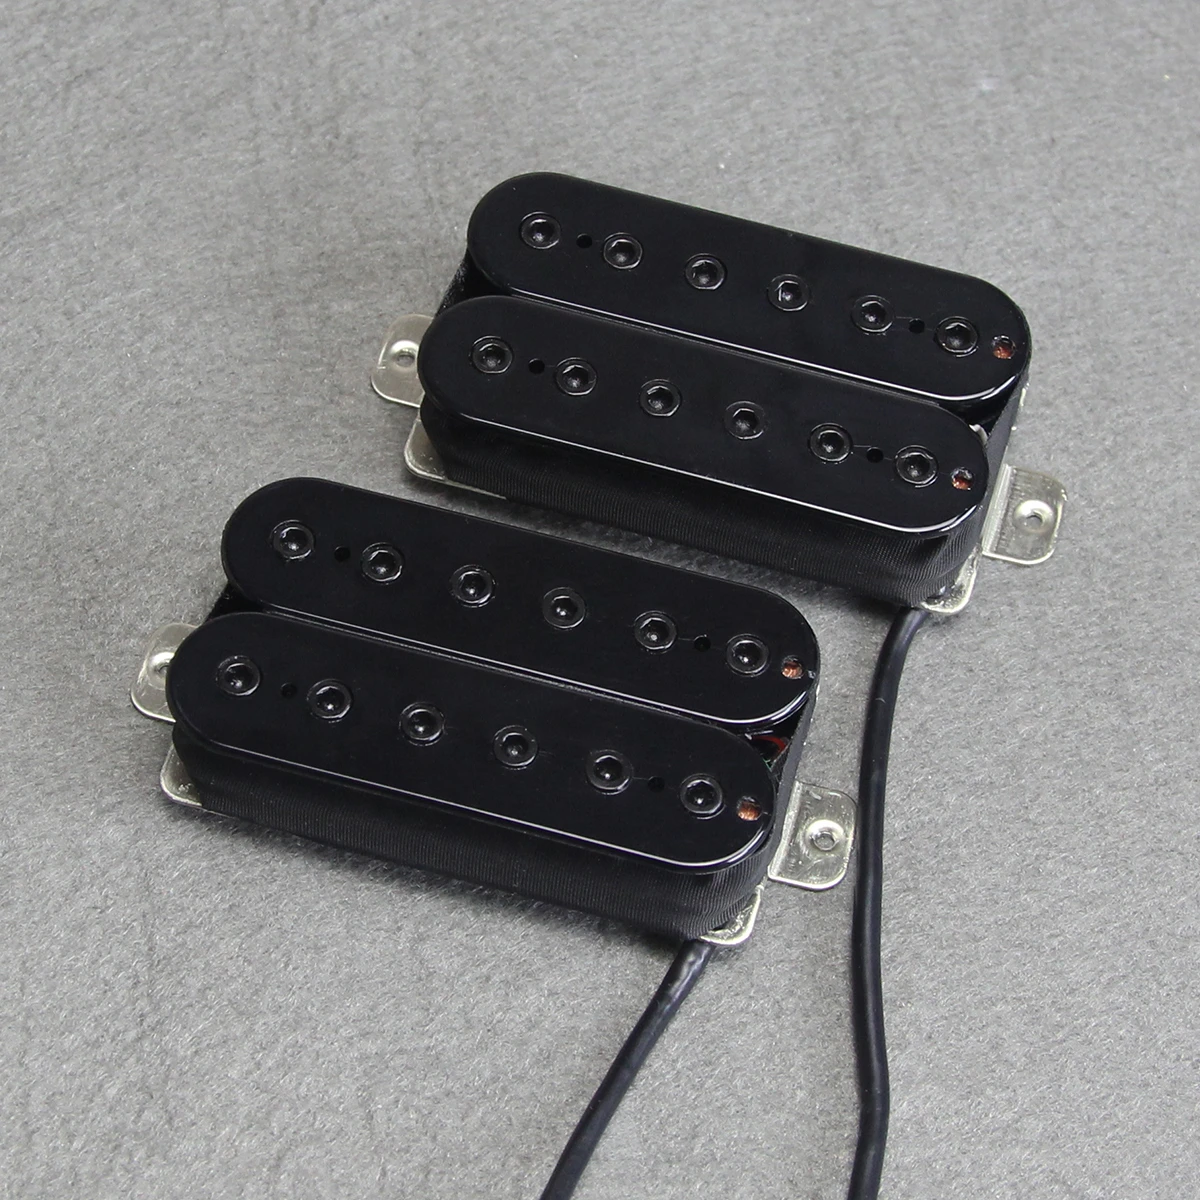 FLEOR Set of Humbucker Pickup Electric Guitar Pickup Neck Bridge Set Ceramic Magnet Guitar Parts, Black / White Choose